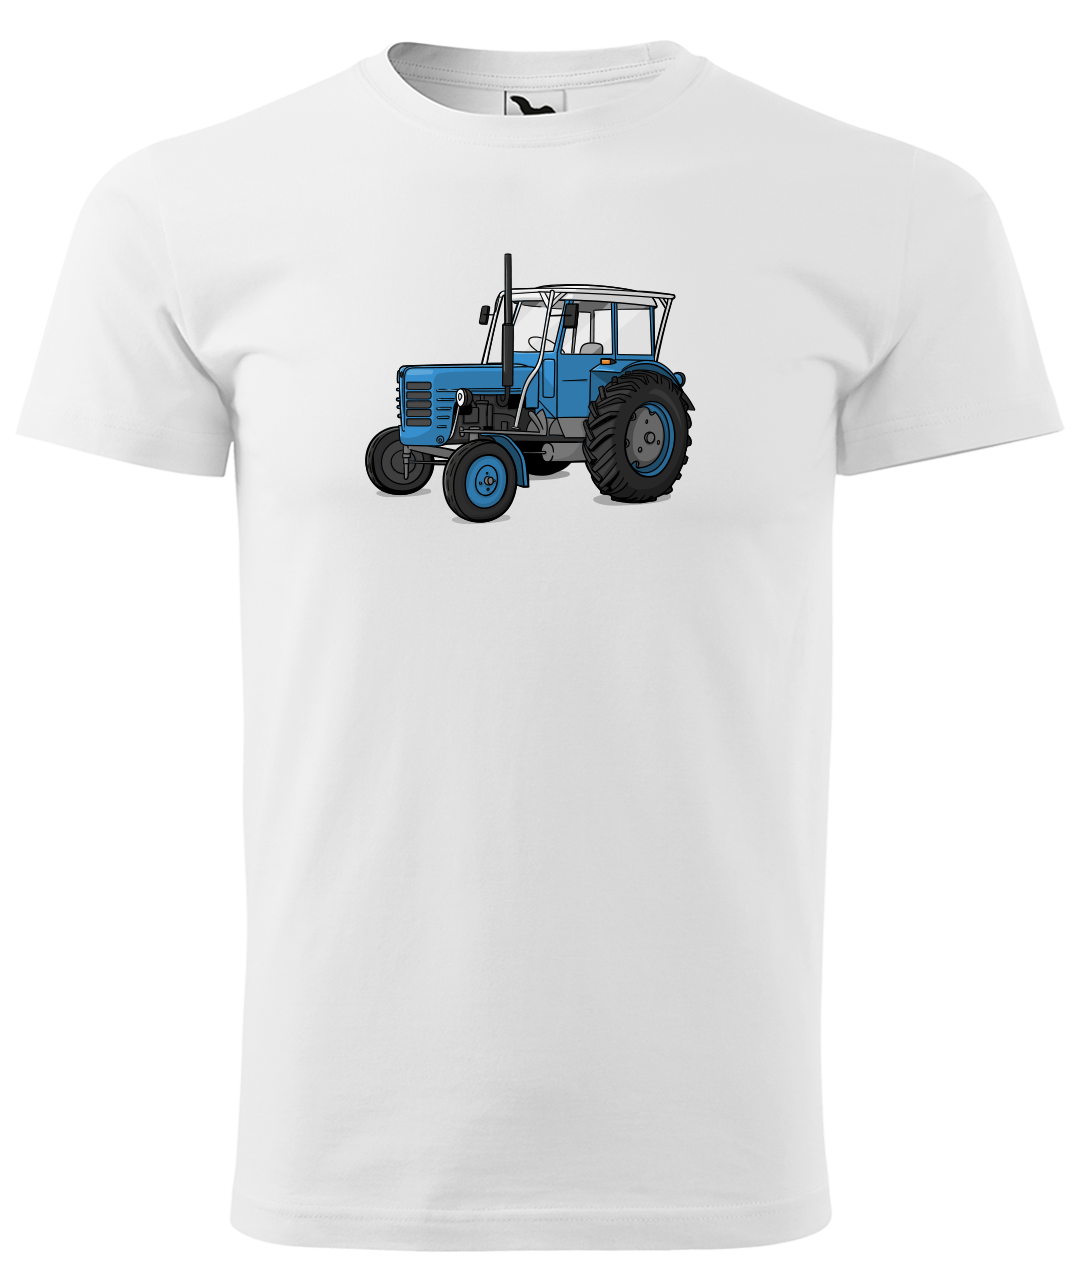 Dětské tričko s traktorem - Starý traktor Velikost: 10 let / 146 cm, Barva: Bílá (00)